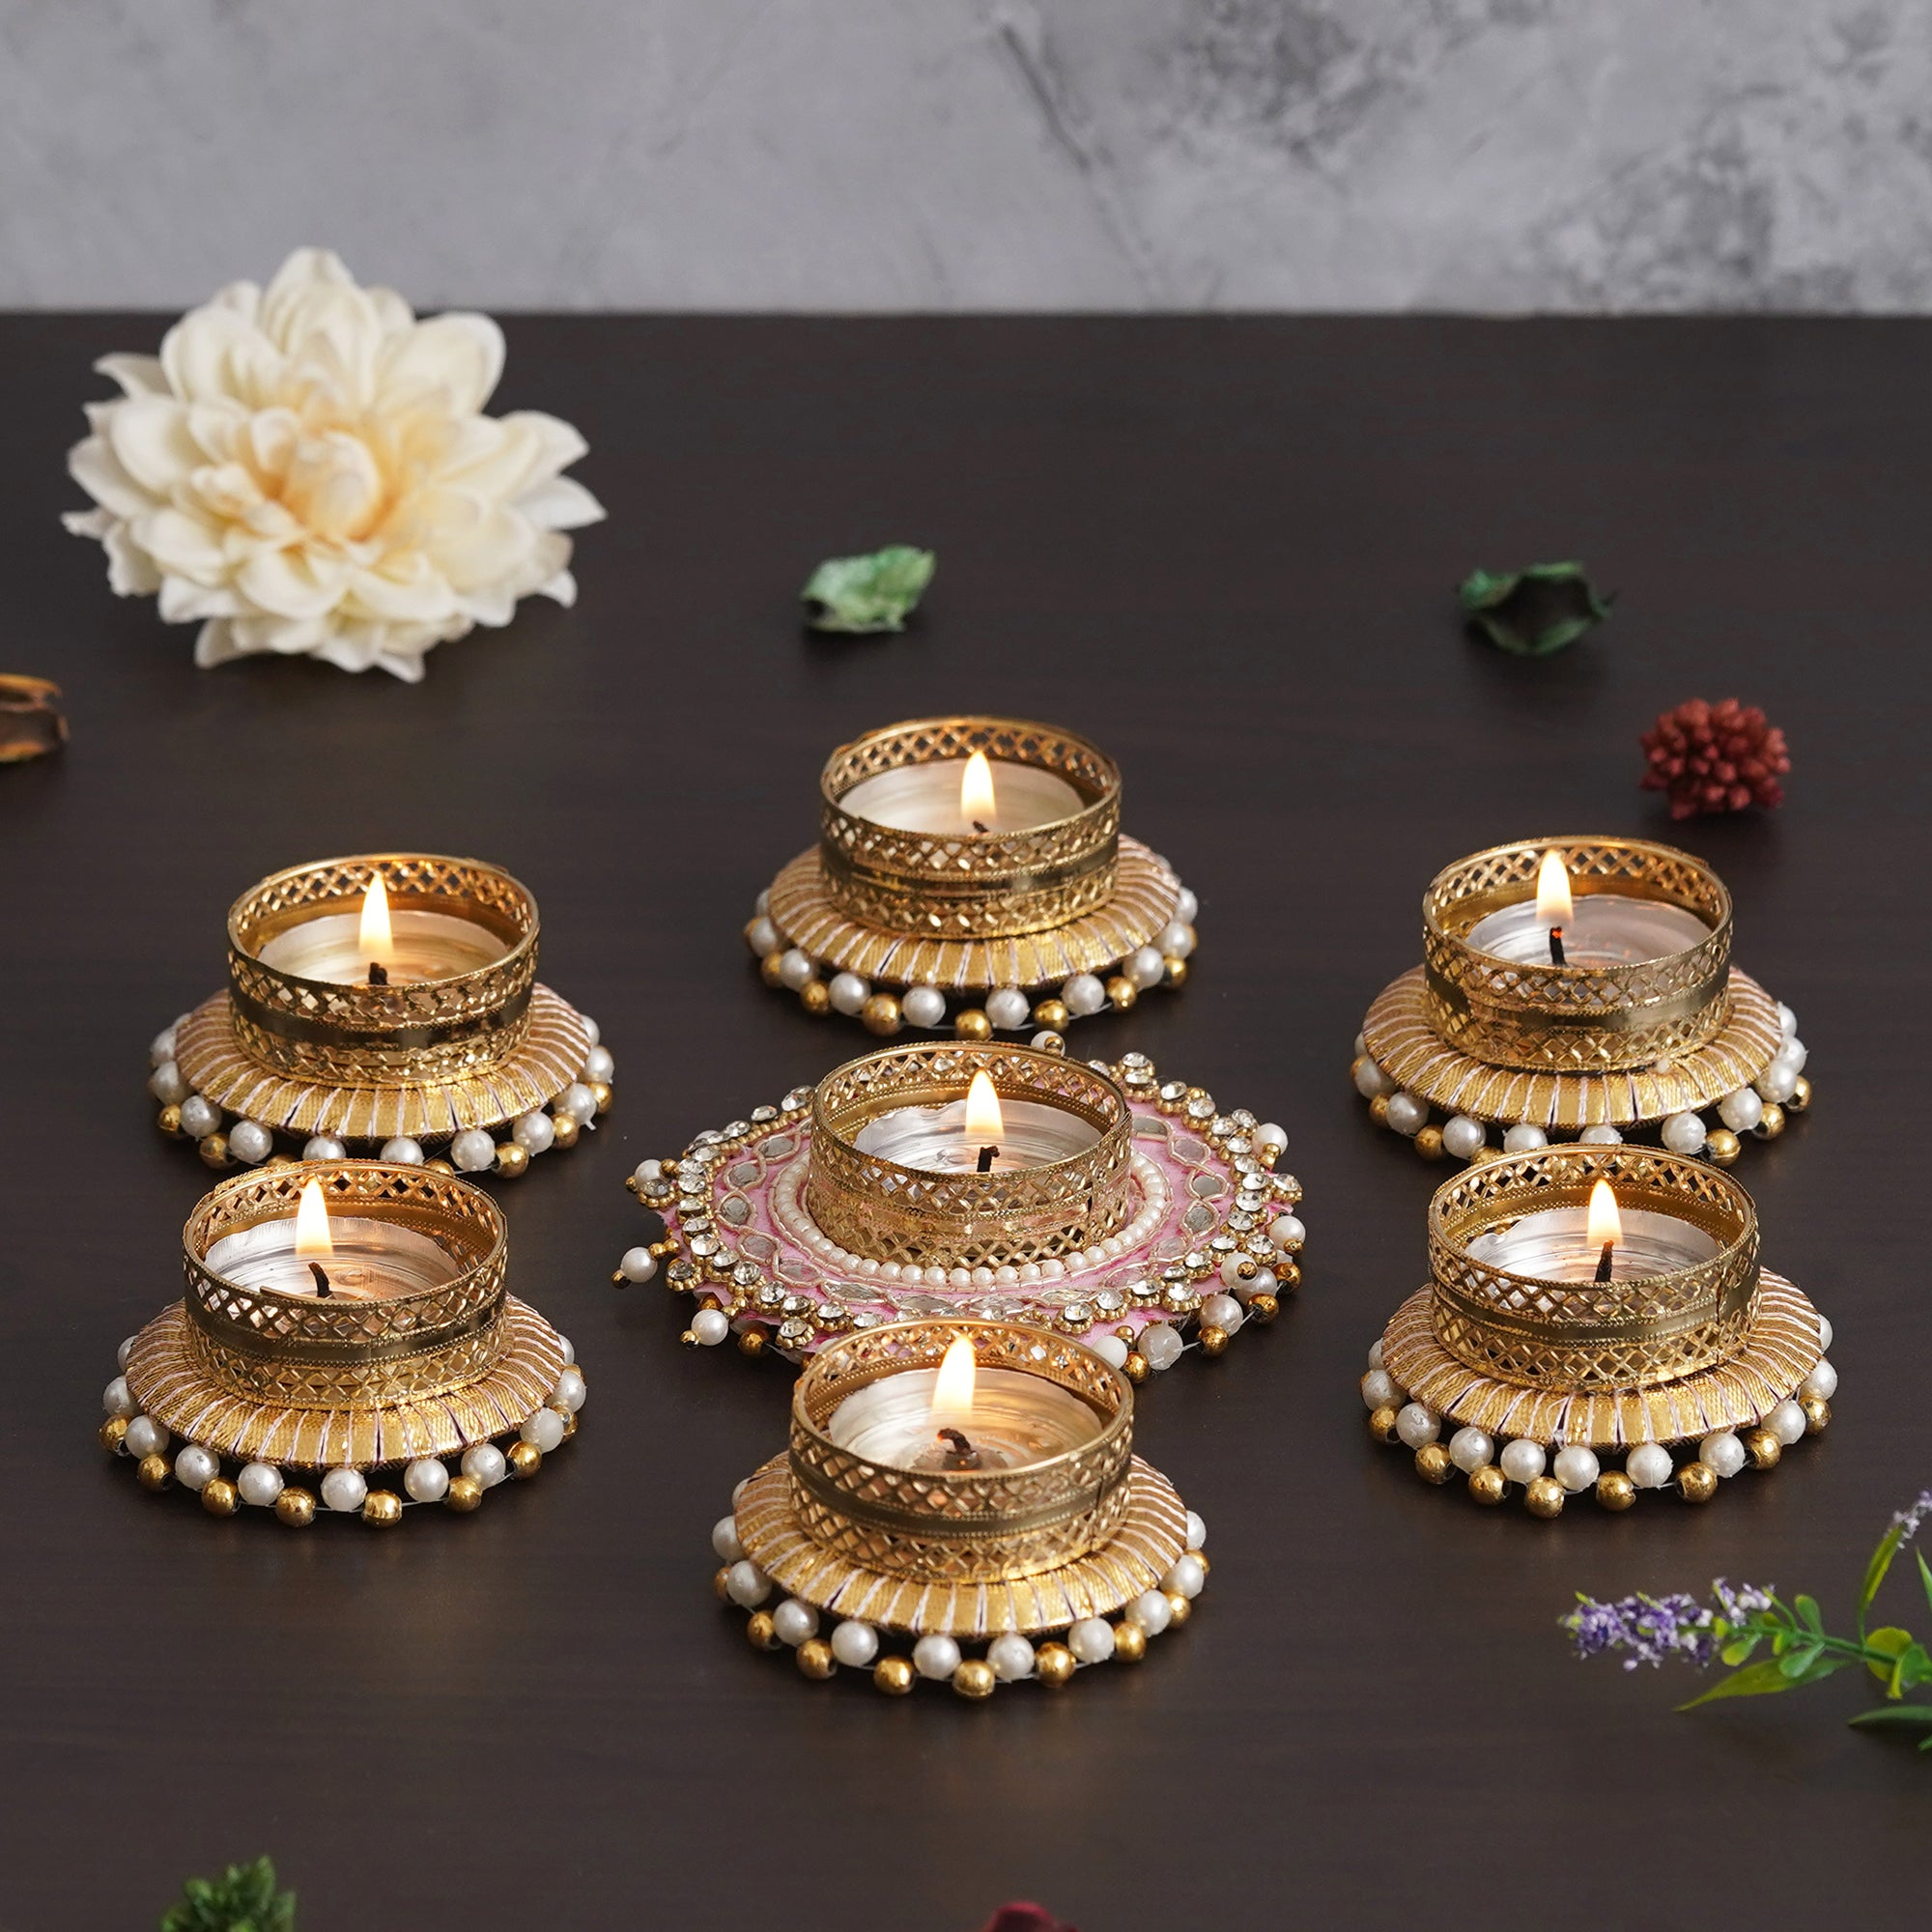 eCraftIndia Set of 7 Round Shaped Diamond Beads and Pearls Decorative Tea Light Candle Holders 5